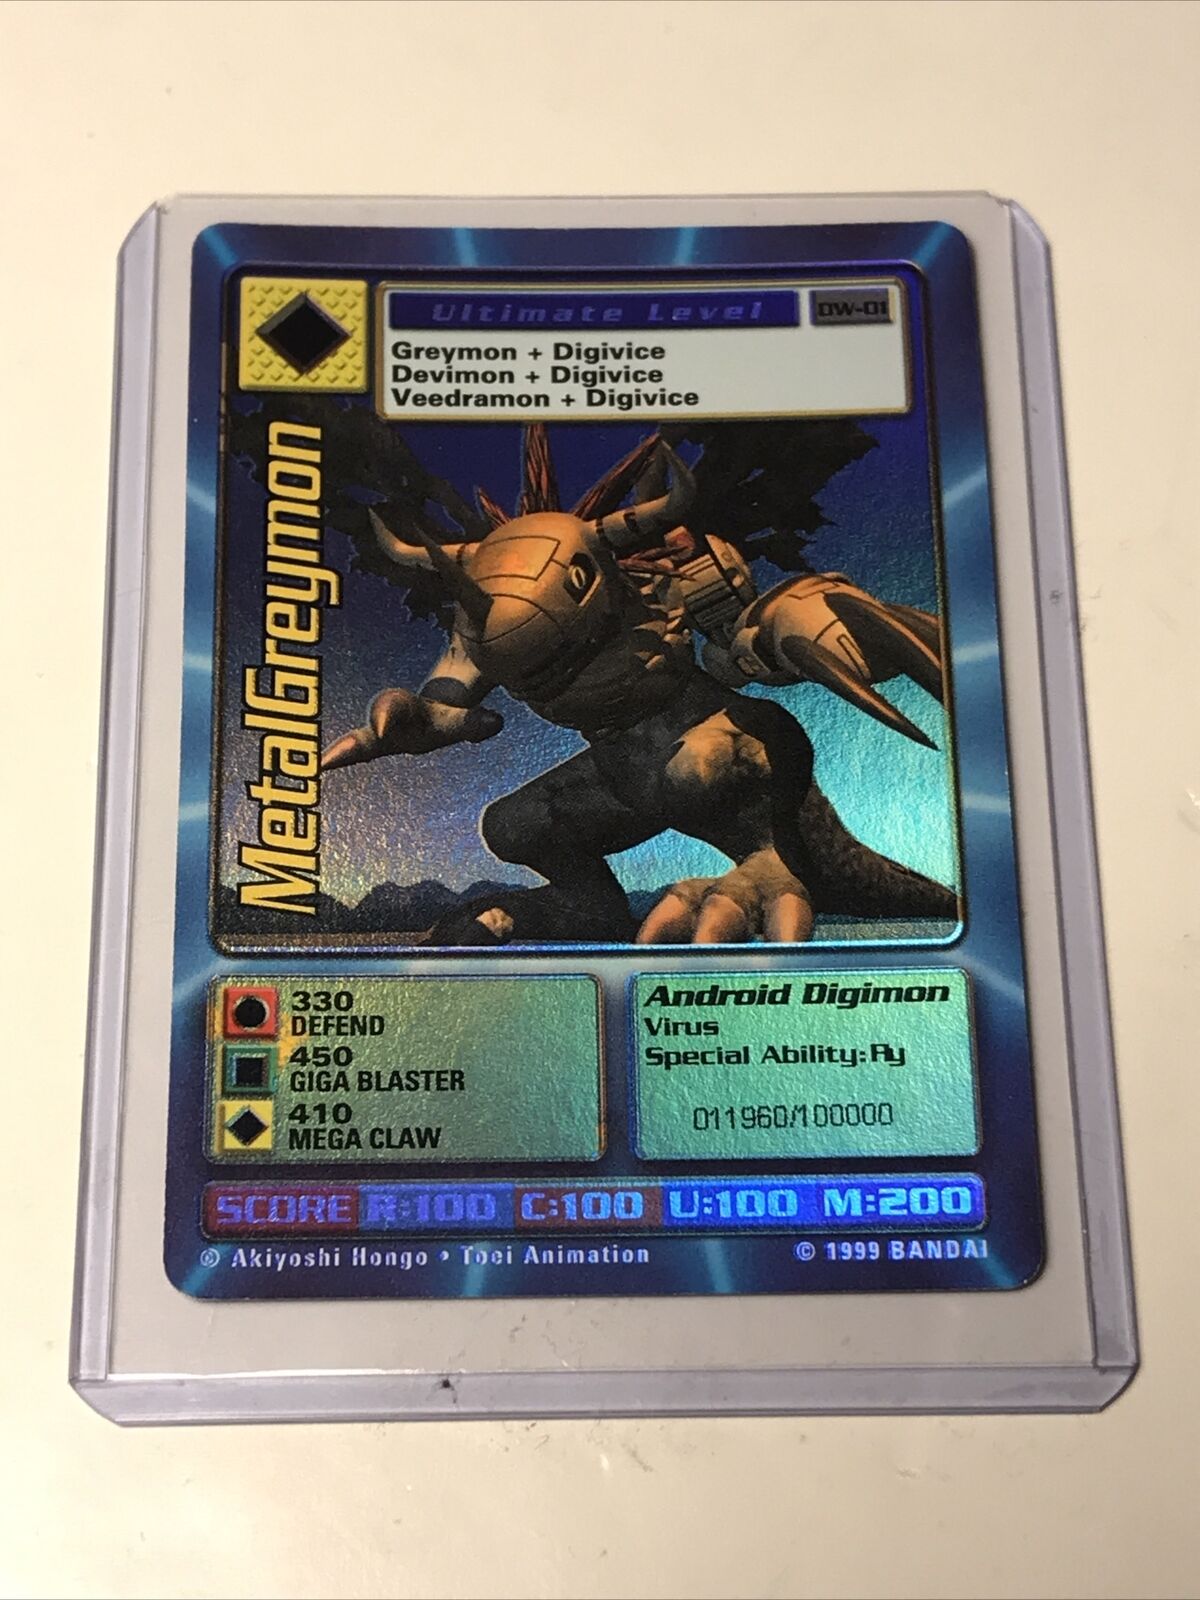 Digimon World PlayStation Promo DW-01 MetalGreymon - number 011960 / 100,000